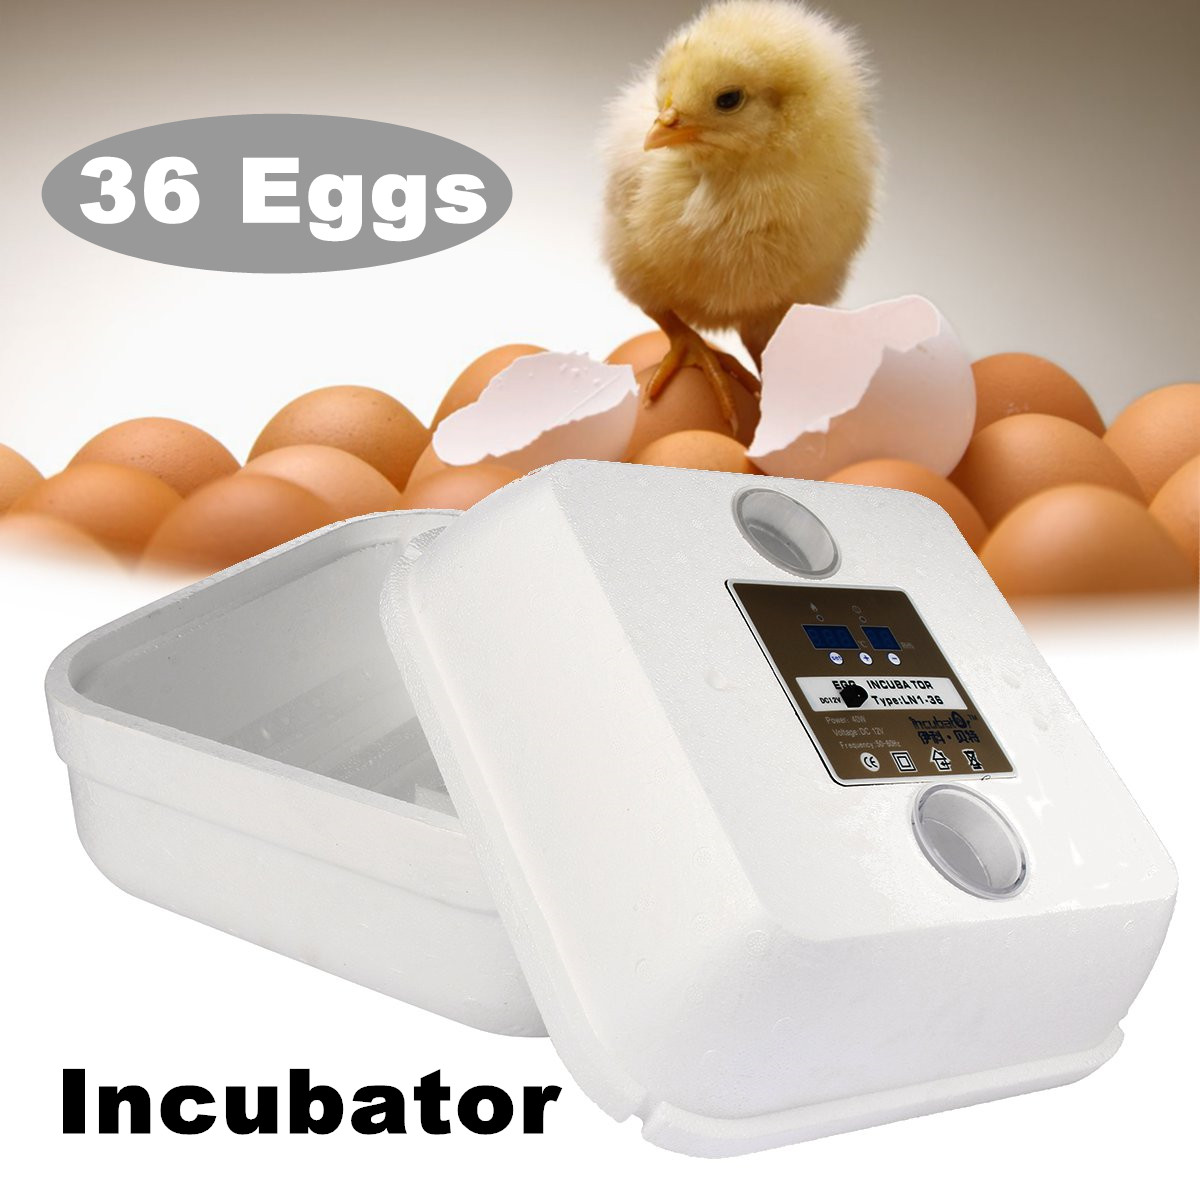 110V-220V-36-Eggs-Foam-Automatic-Family-Incubator-Digital-Chicken-Duck-Poultry-Hatcher-Tray-Egg-Incu-1275381-2